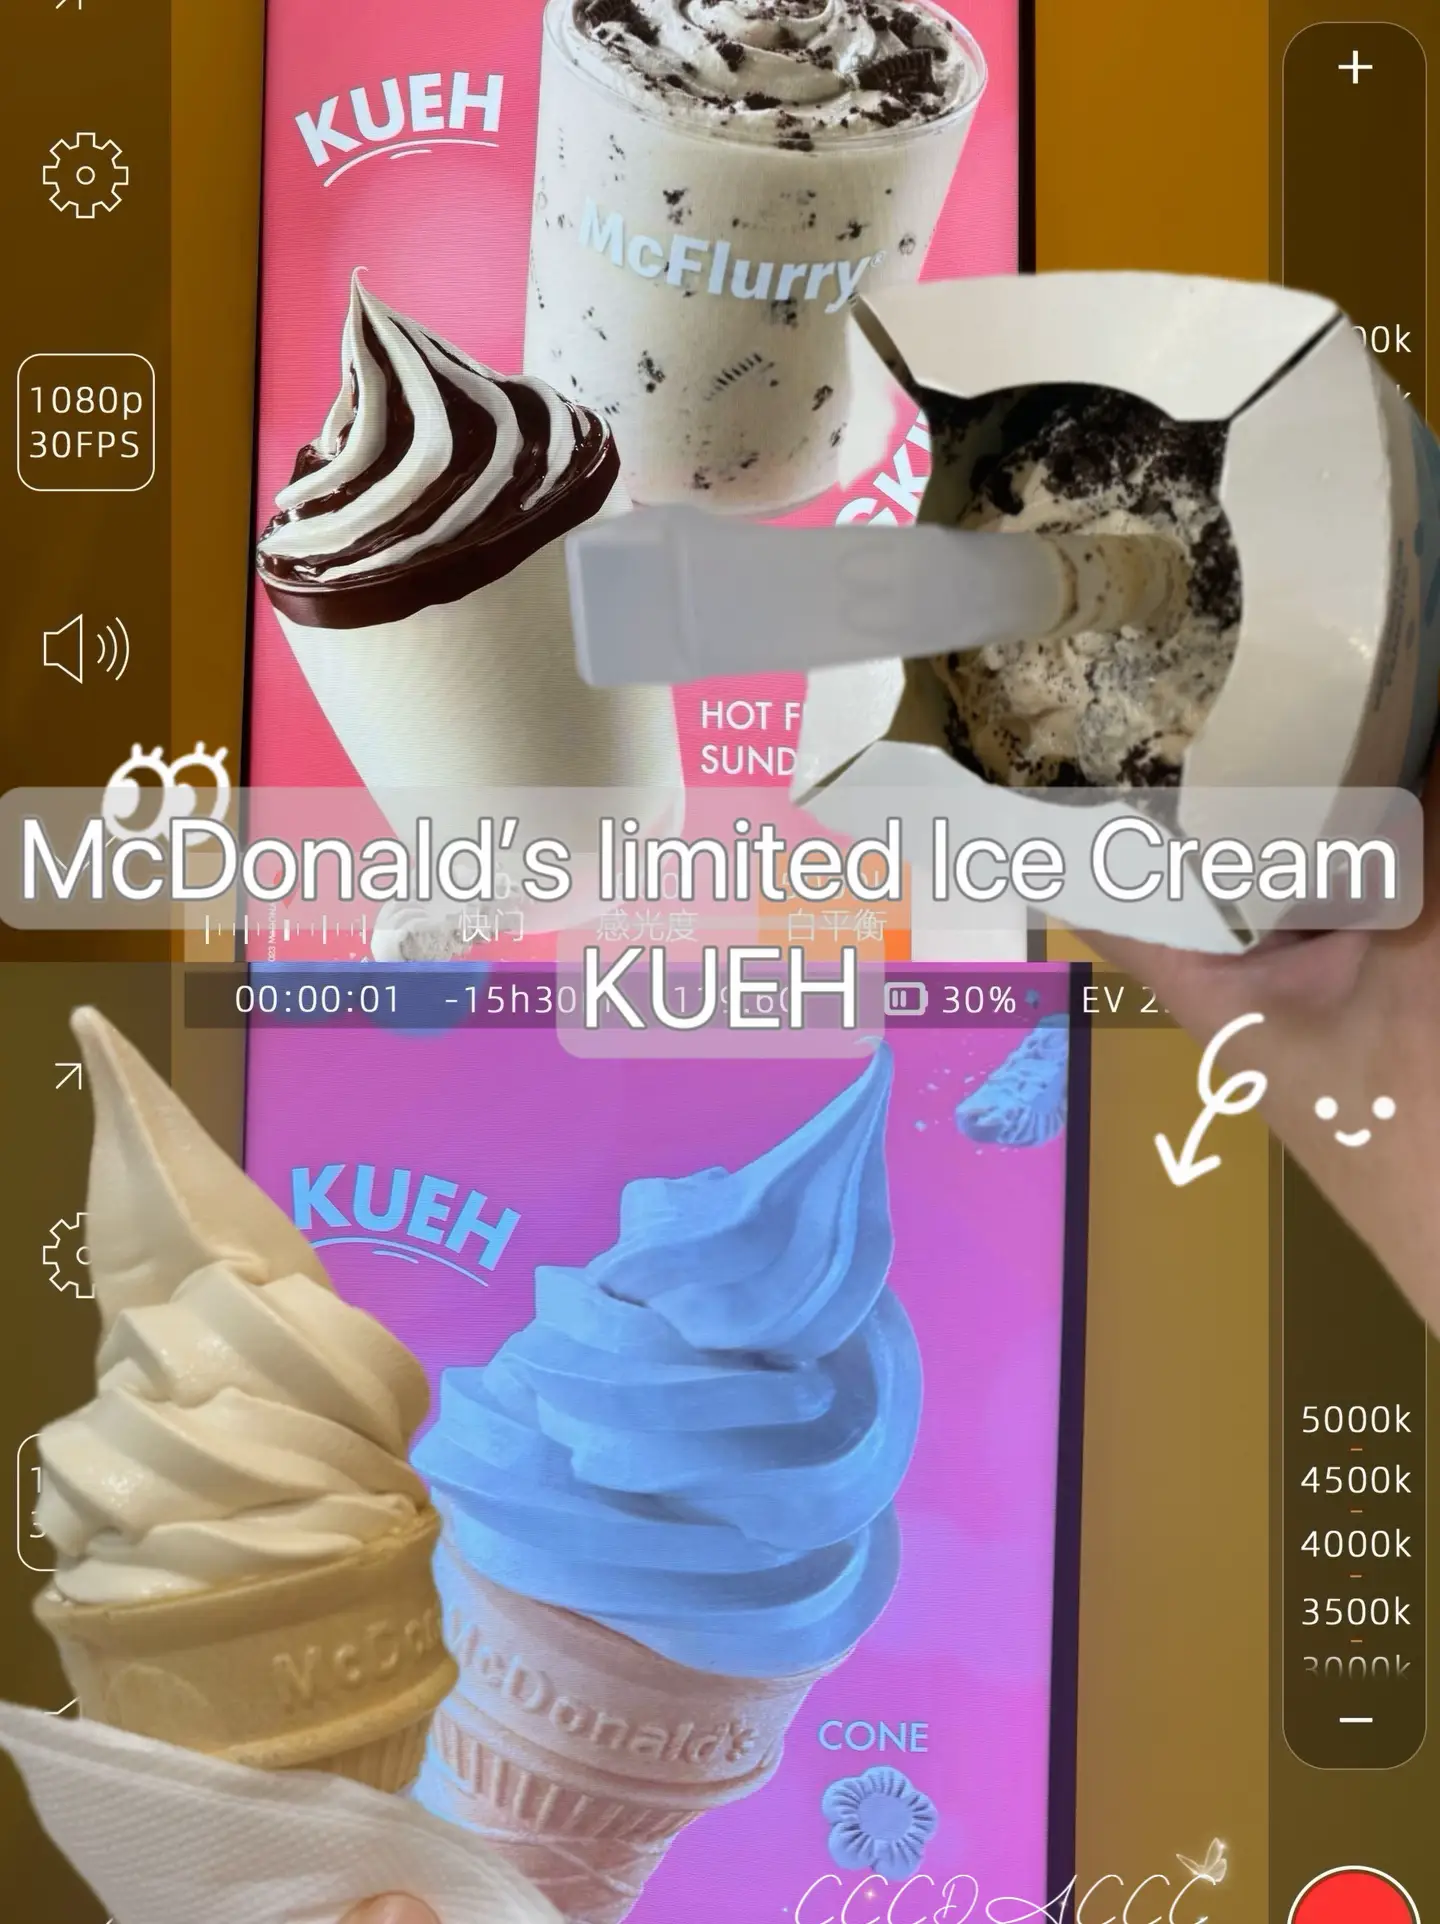 Double Scoop Ice Cream on Cone - Picture of The Affogato Bar, Singapore -  Tripadvisor